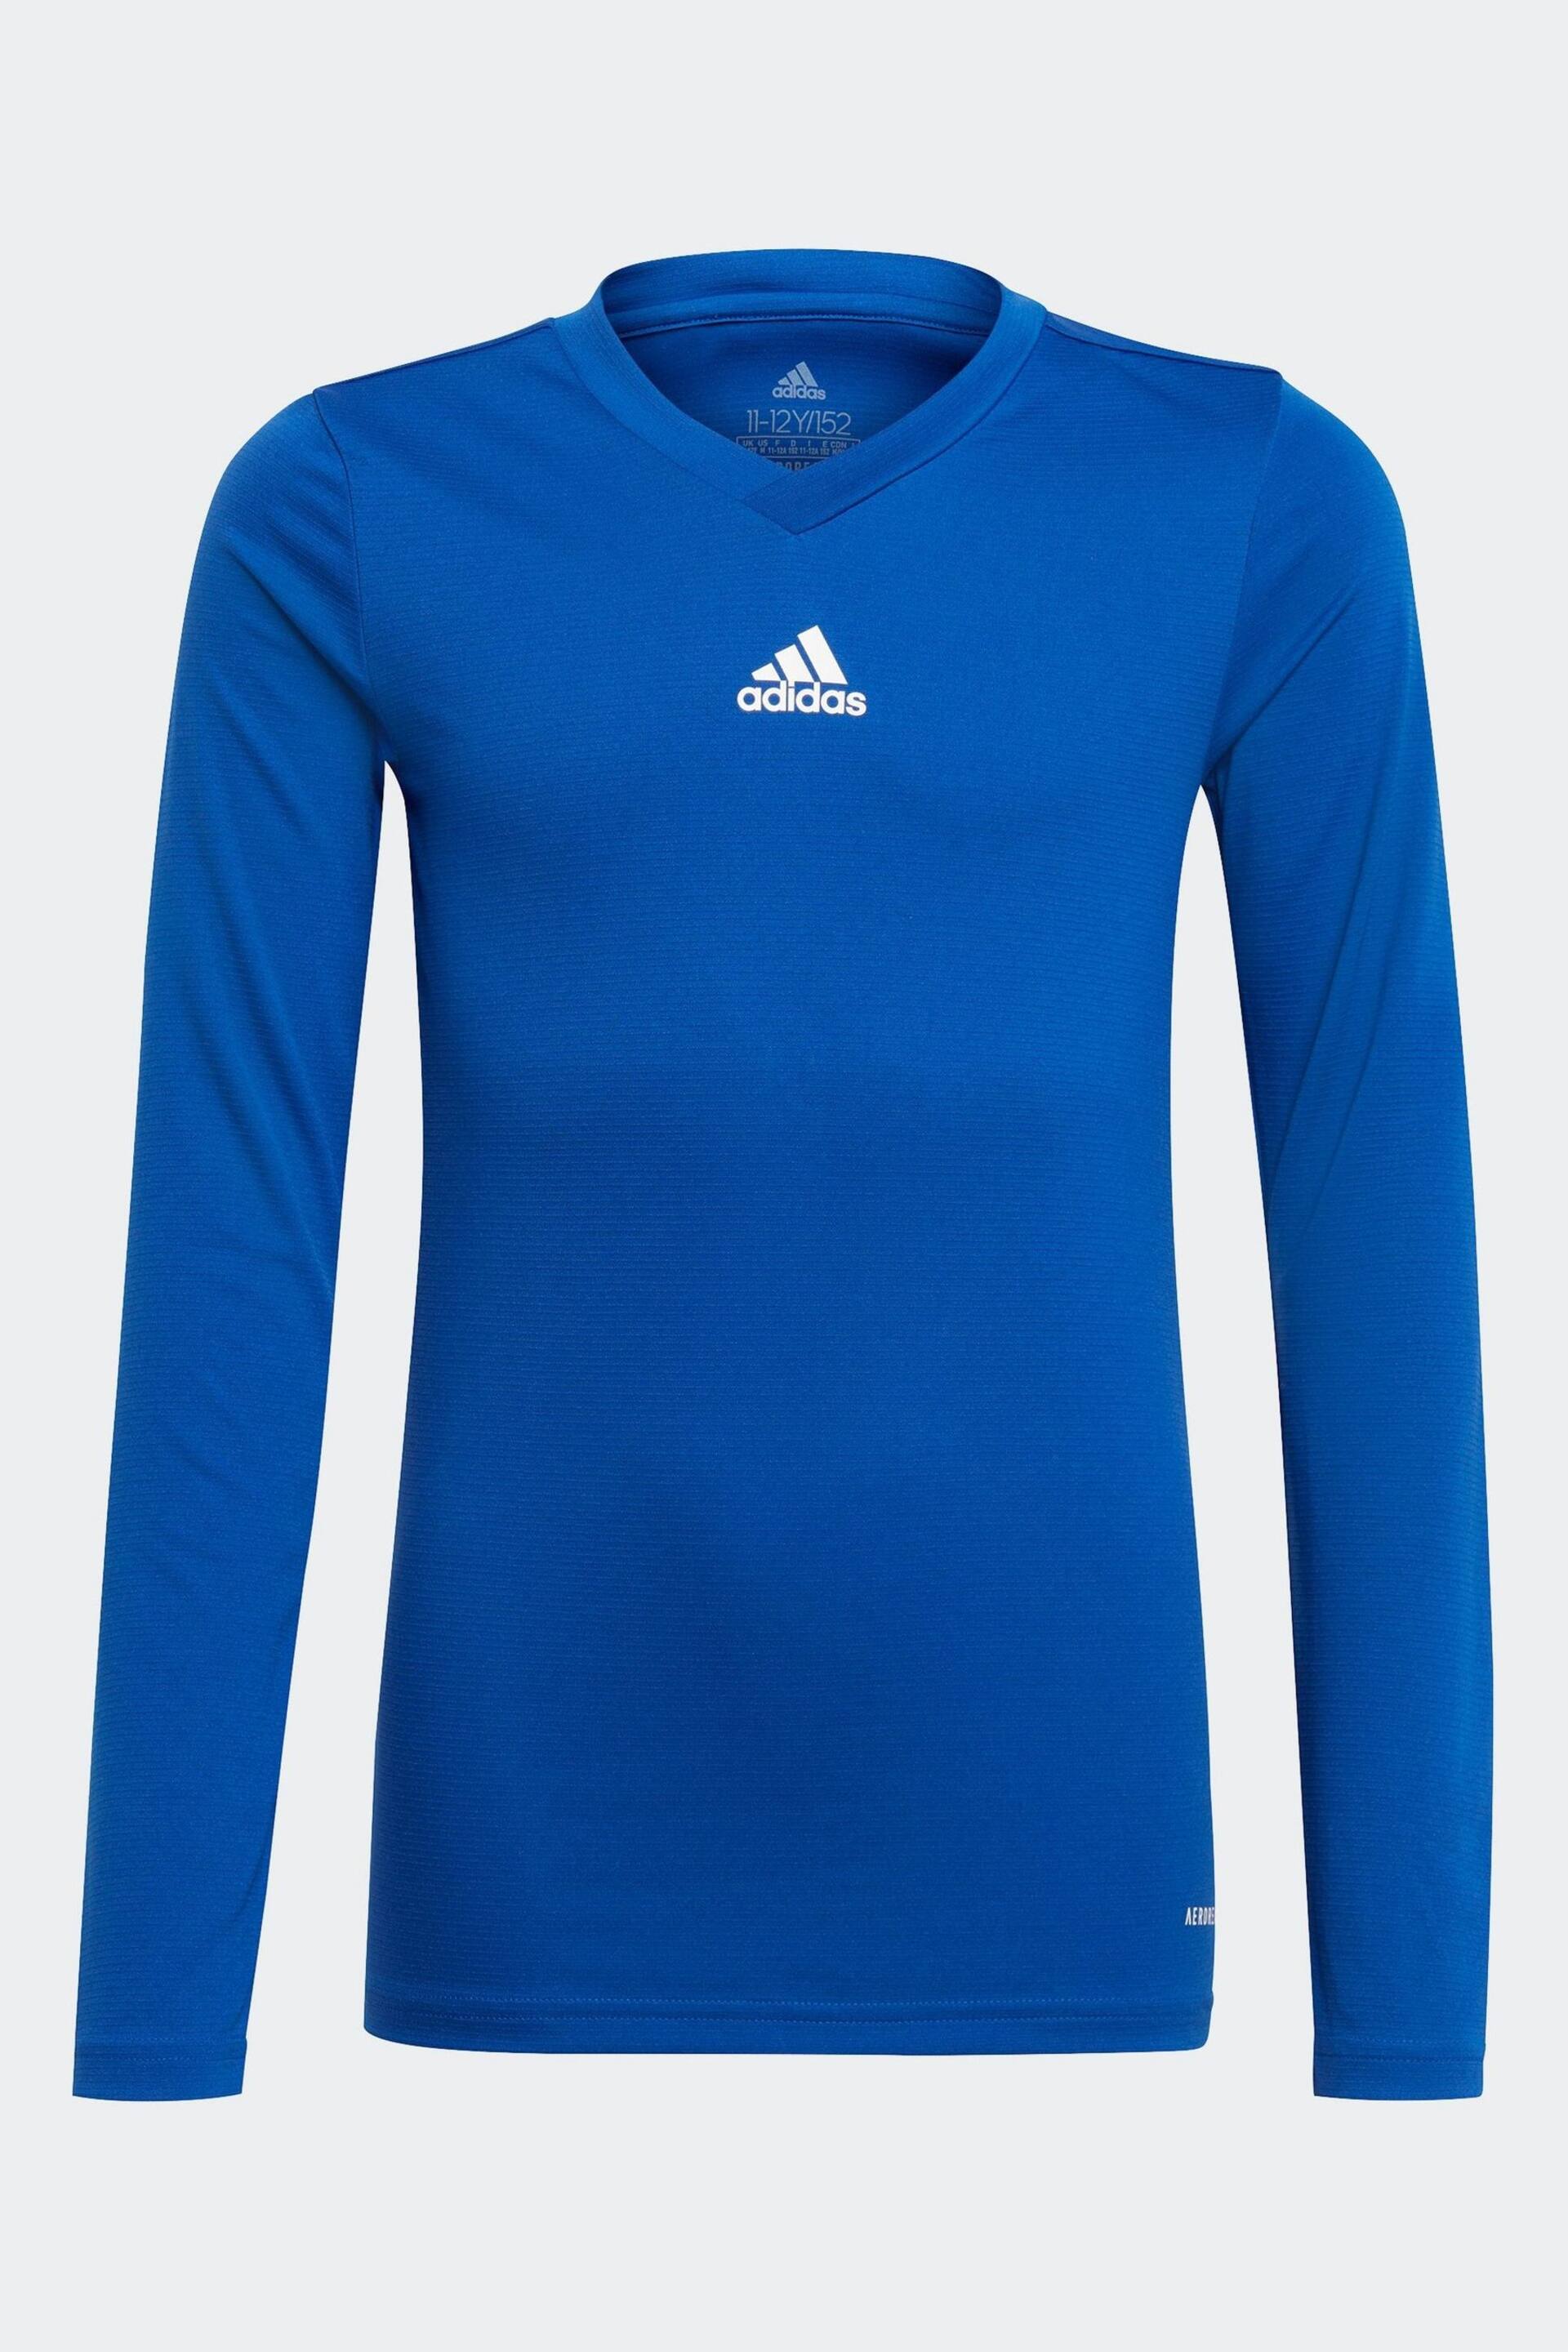 adidas Bright Blue Team Base T-Shirt - Image 1 of 5